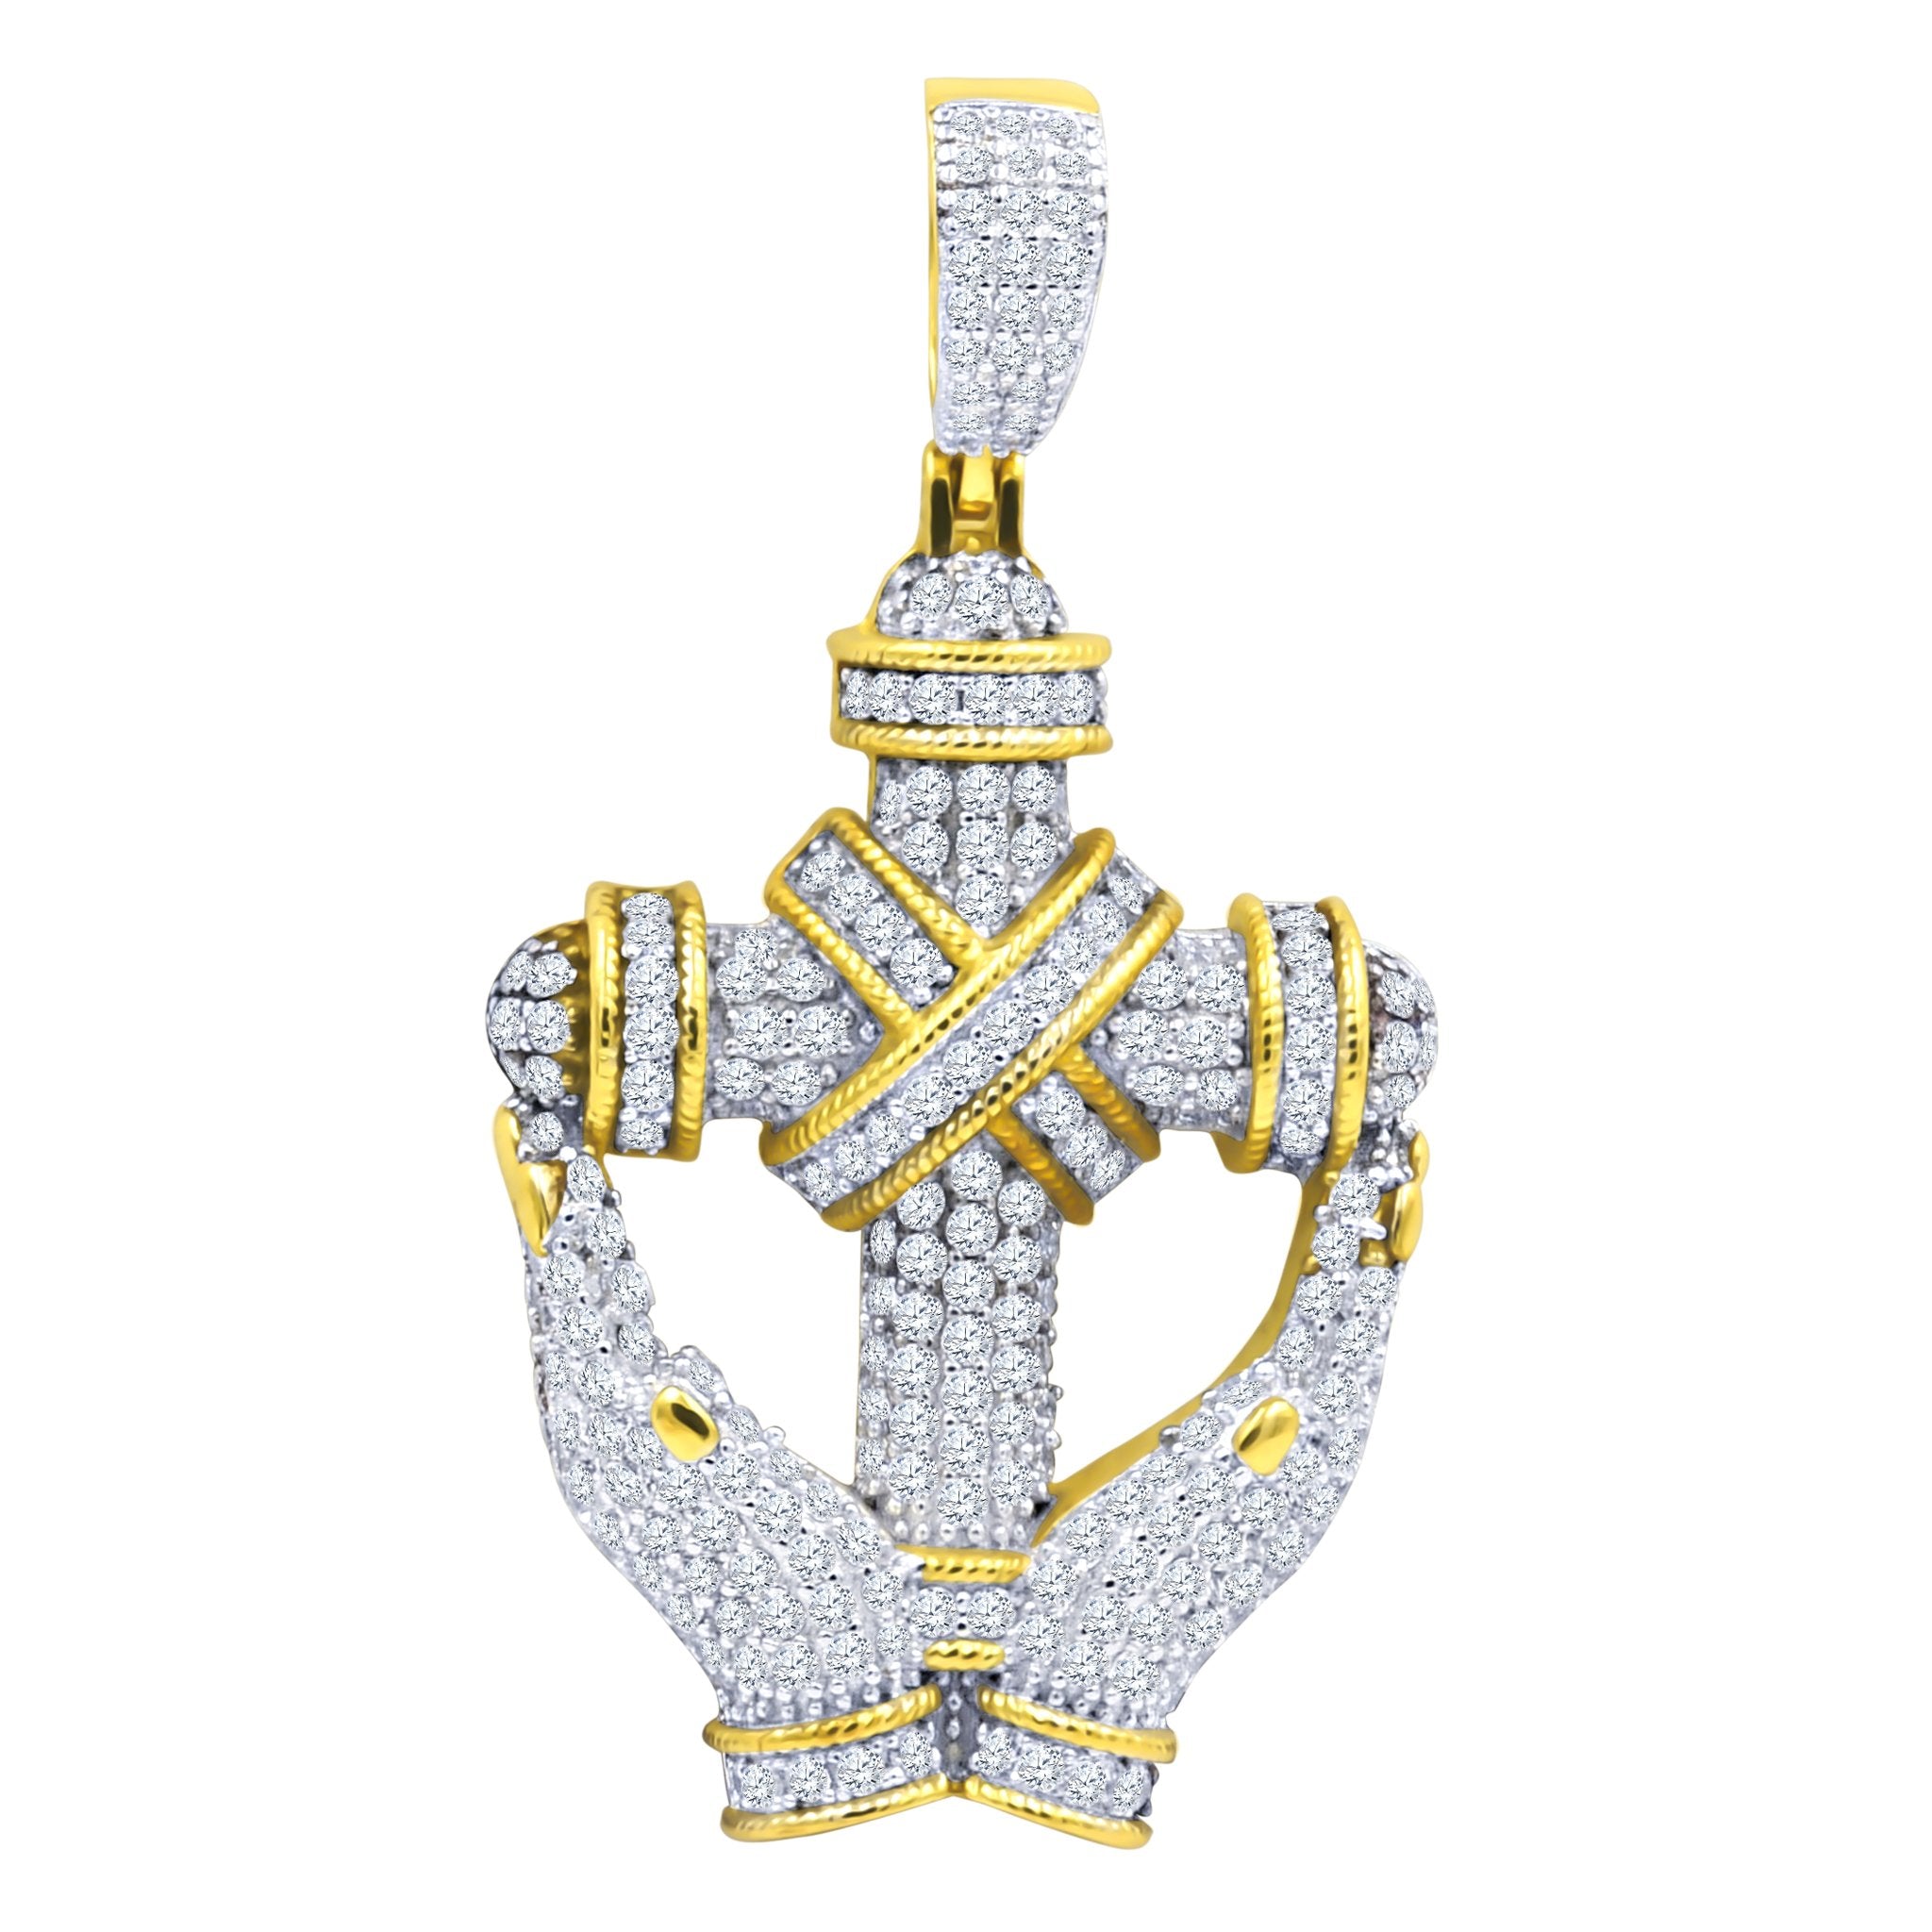 Sanctitude Cross Pendant with CZ Stones - Immaculate Christian Jewelry - Jewelry & Watches - Bijou Her -  -  - 